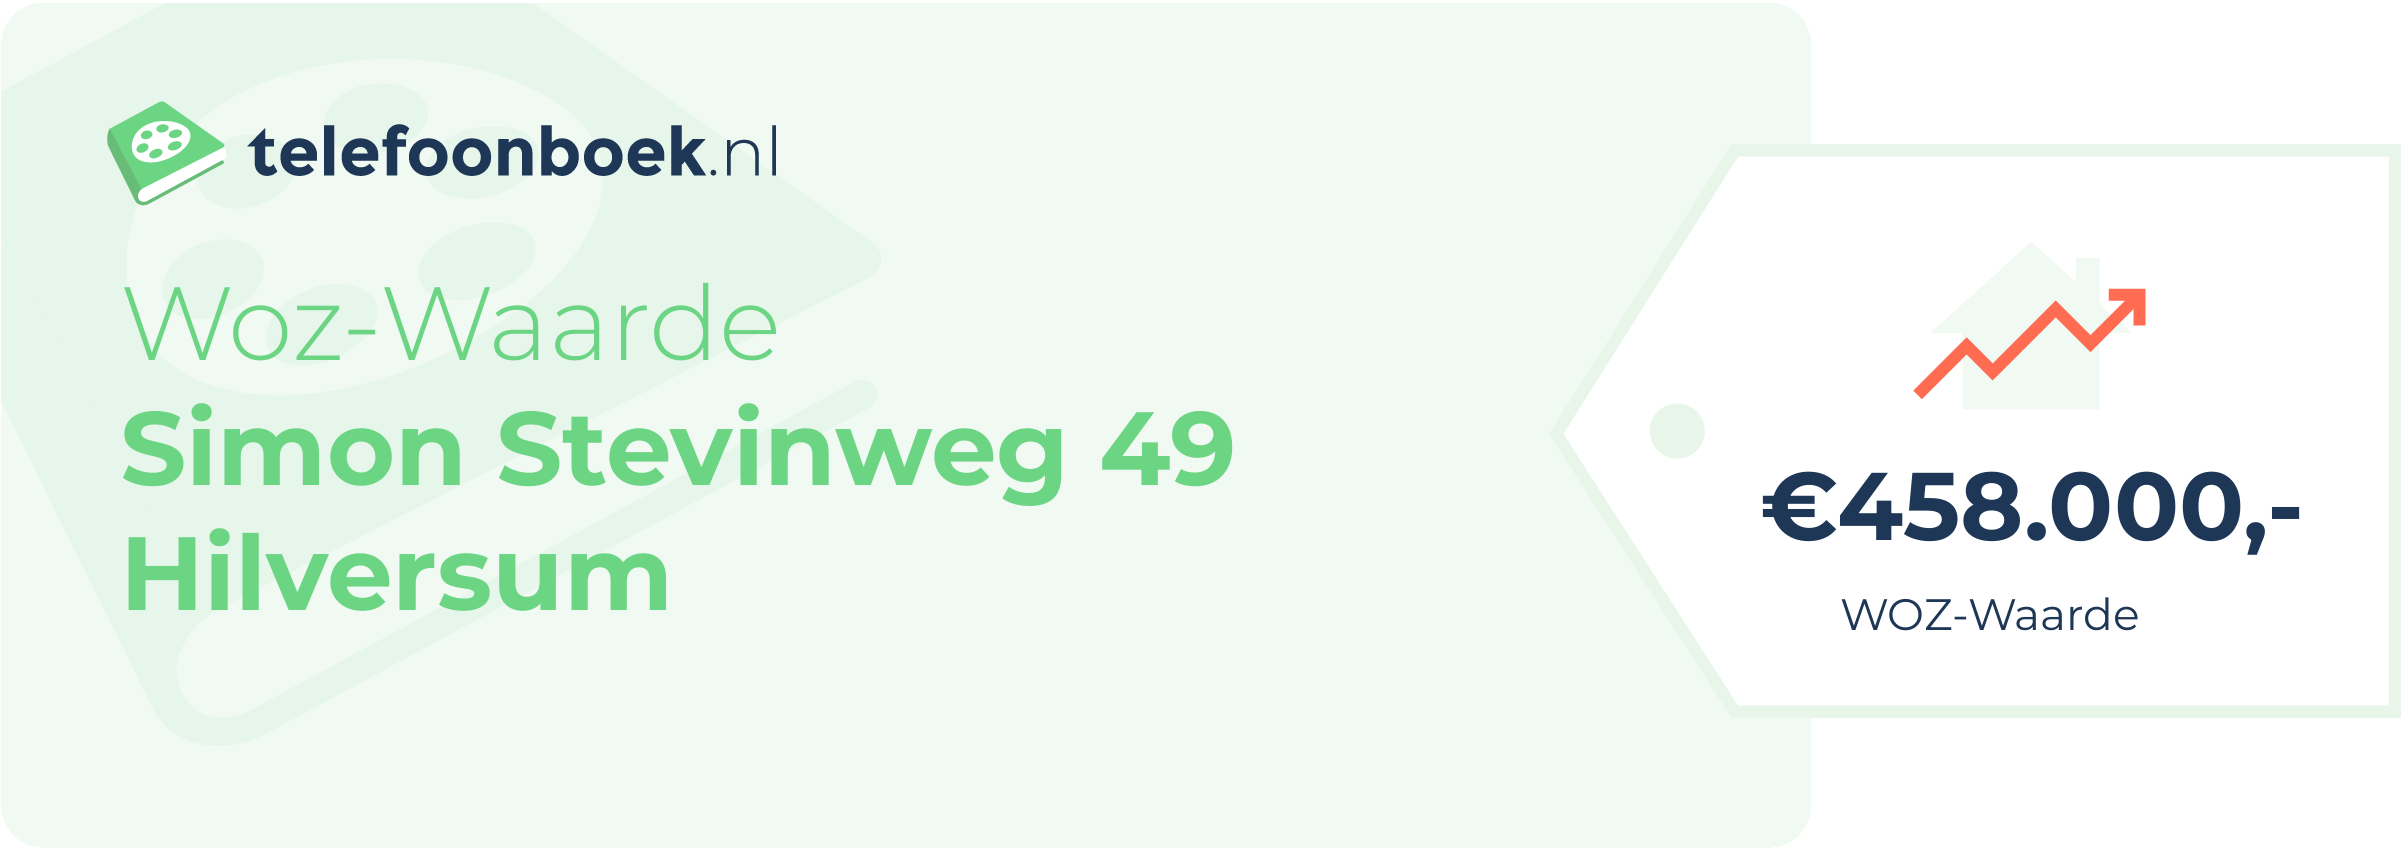 WOZ-waarde Simon Stevinweg 49 Hilversum